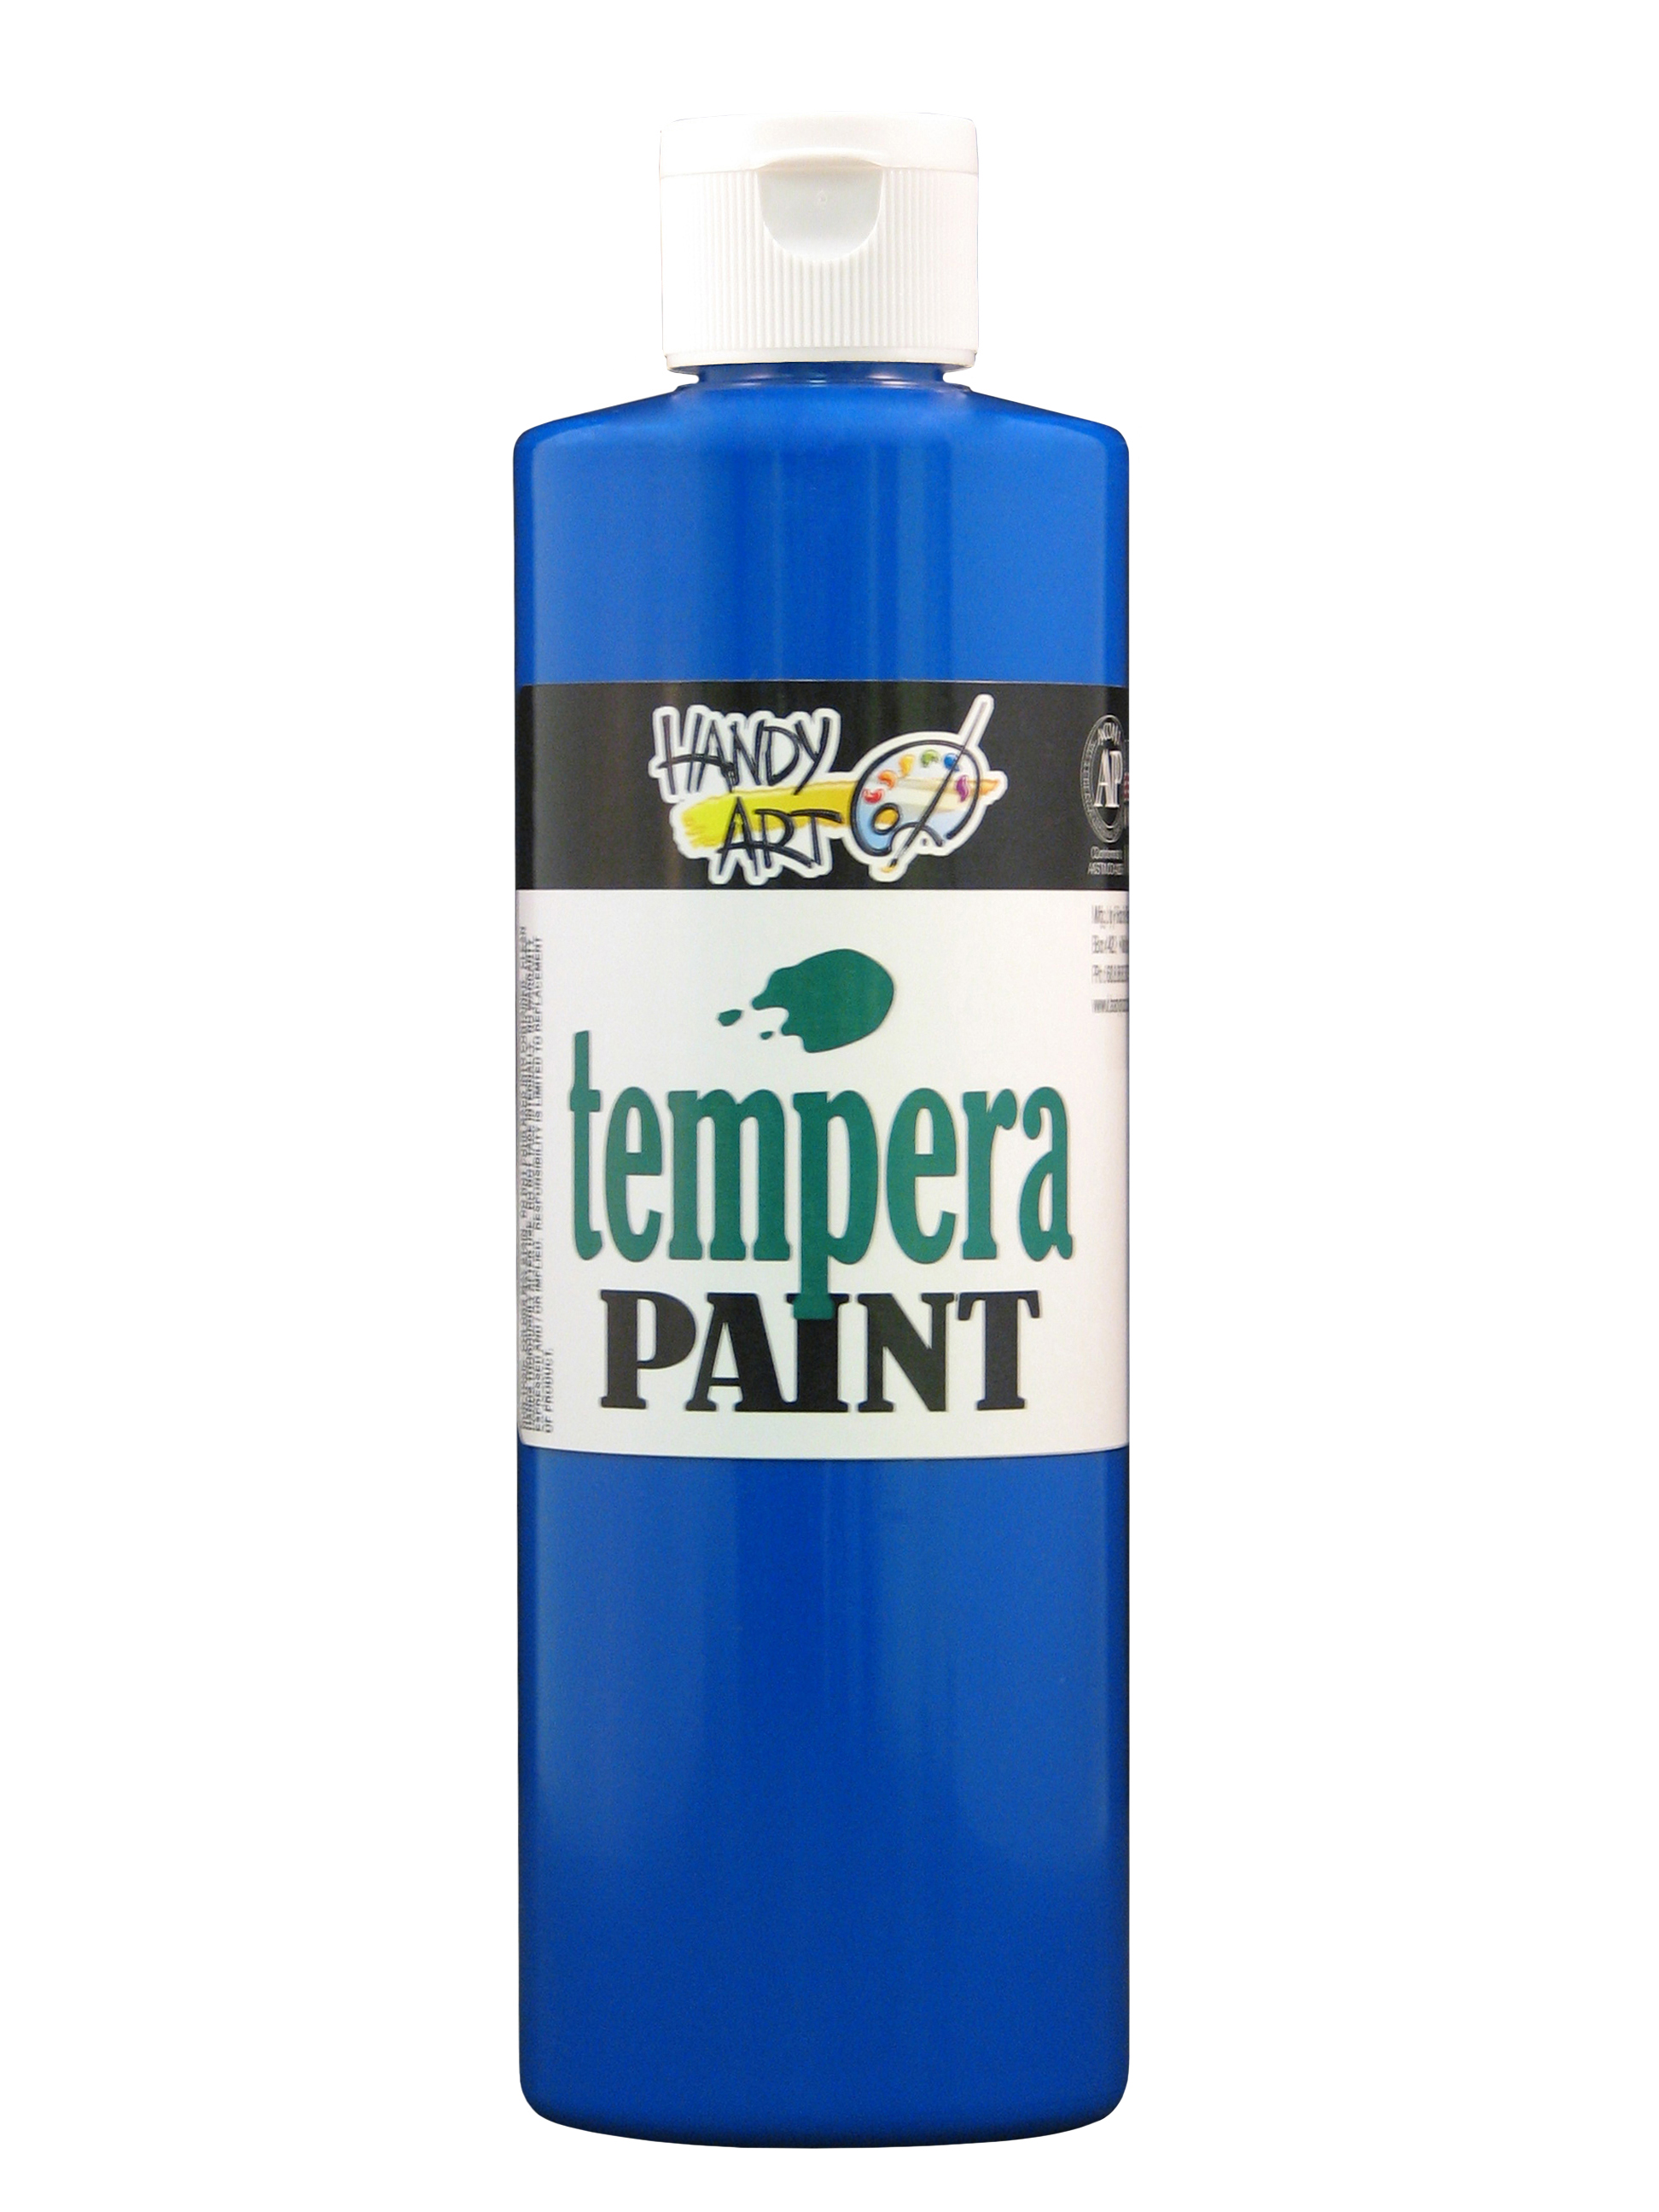 Handy Art 201030 Premium Tempera Paint Blue - 16oz